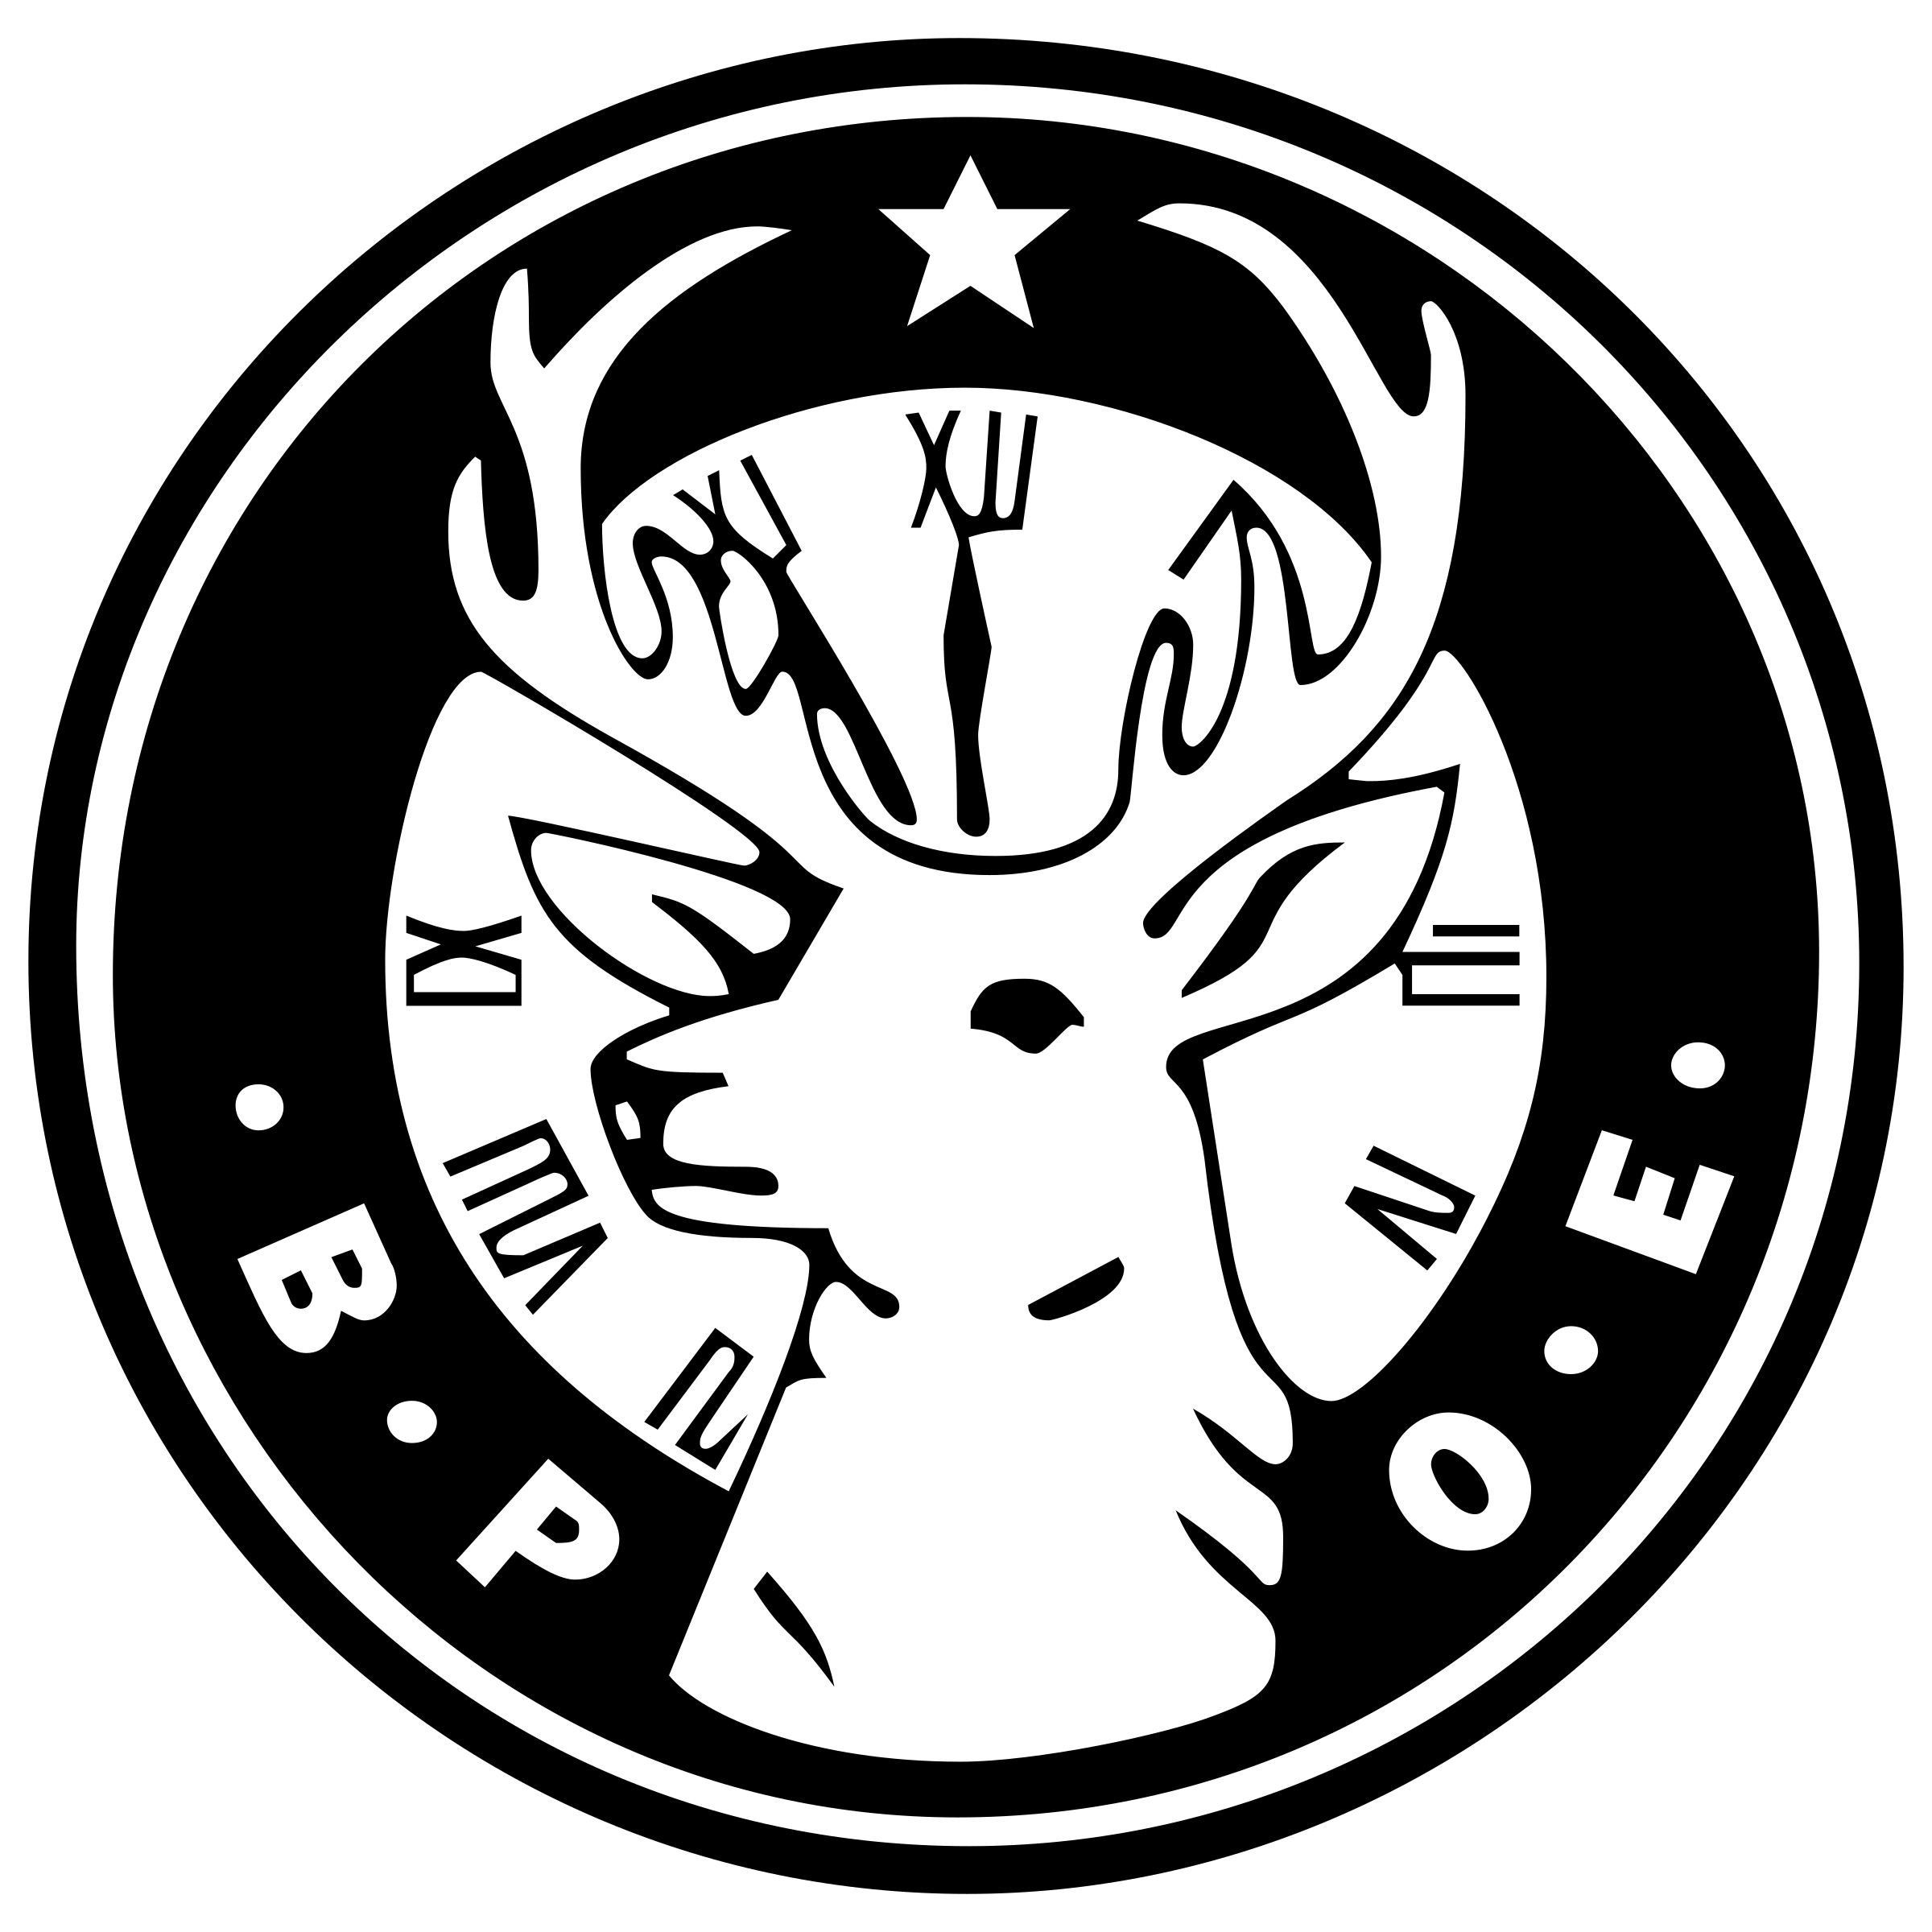 Elks Logo - Elks Club Logo PNG Transparent & SVG Vector - Freebie Supply